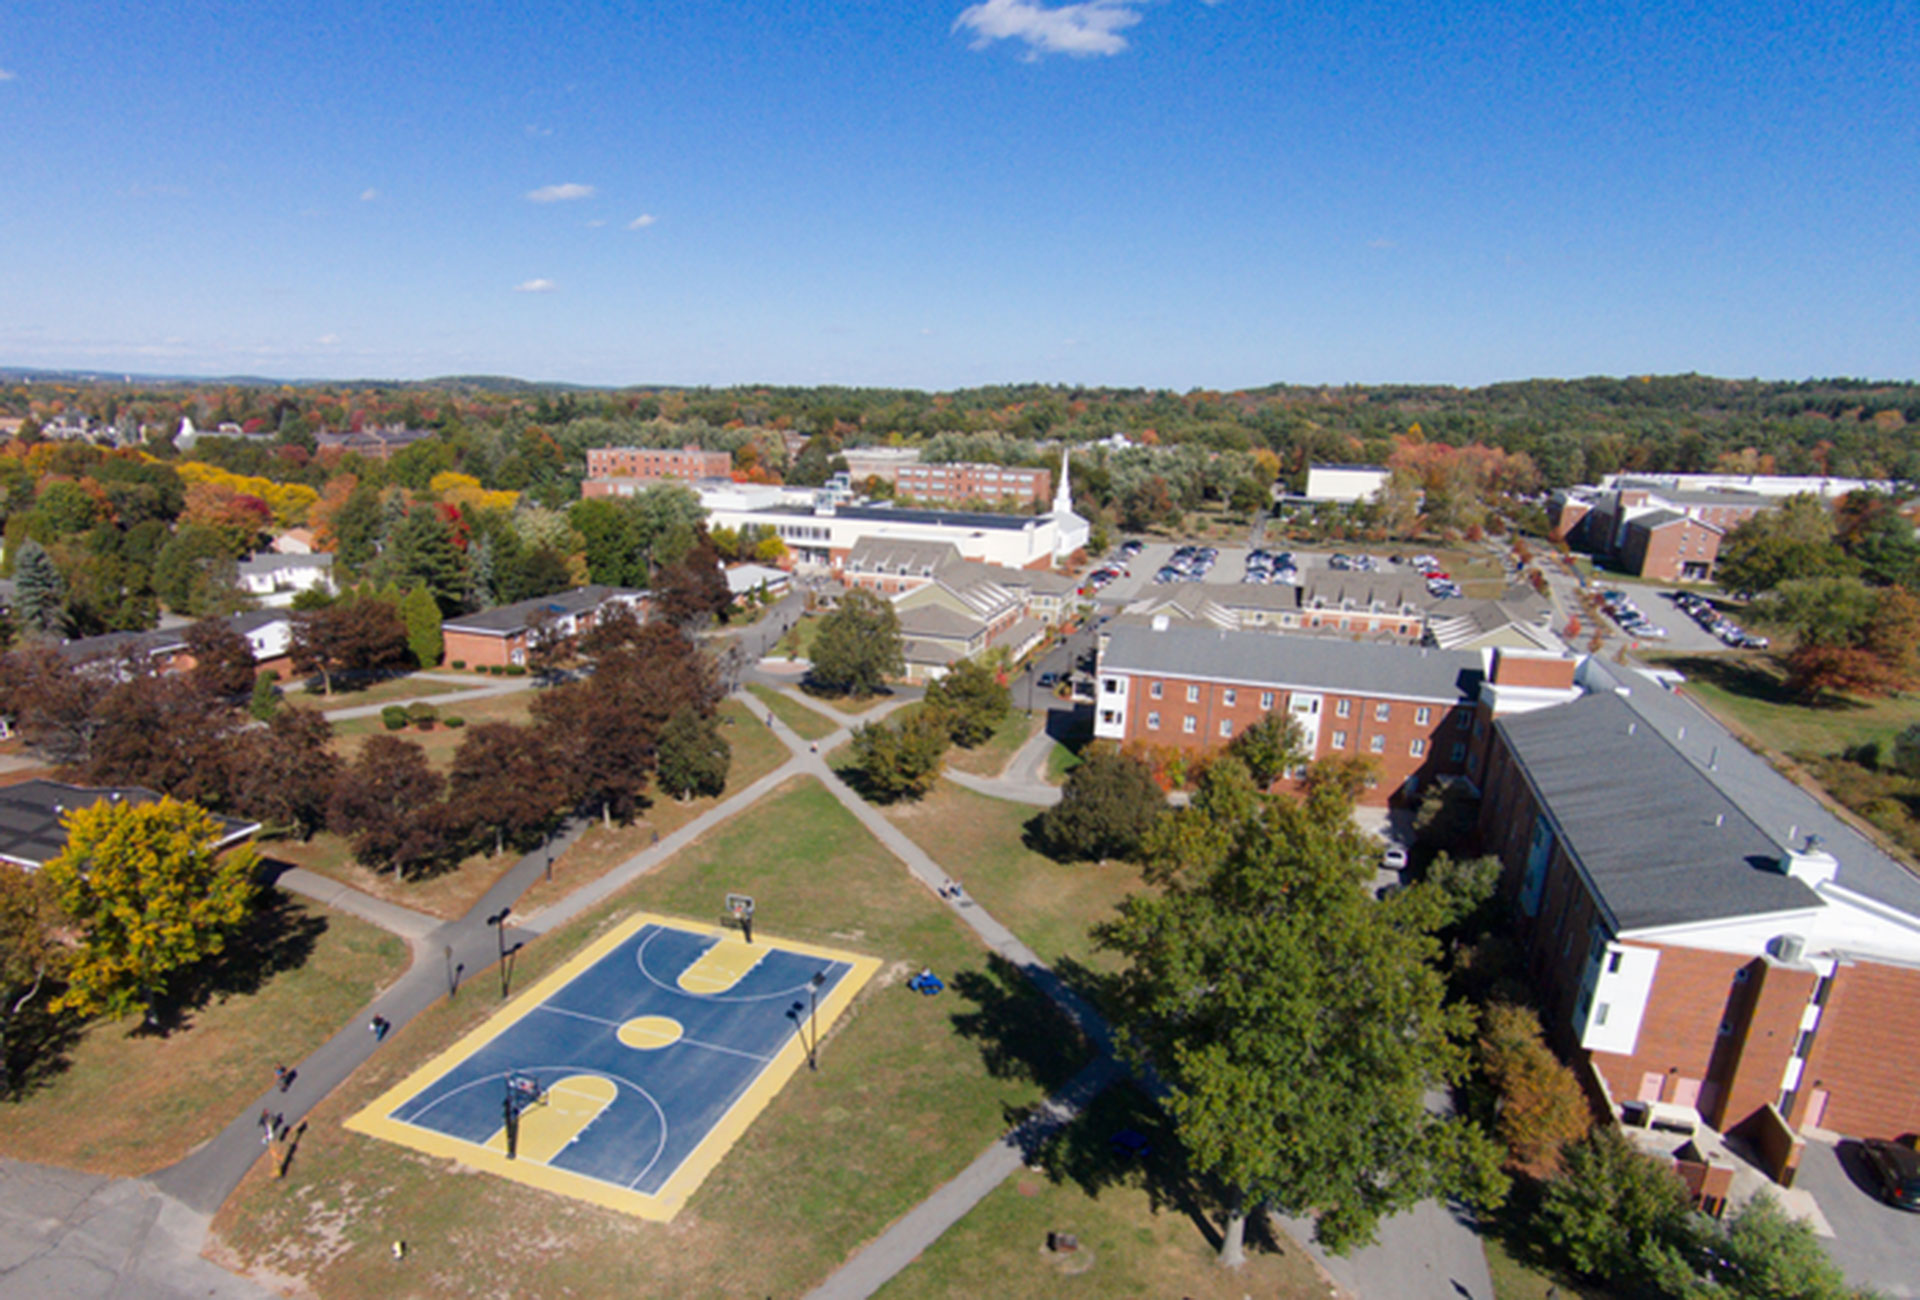 Arial view of Merrimack Campus